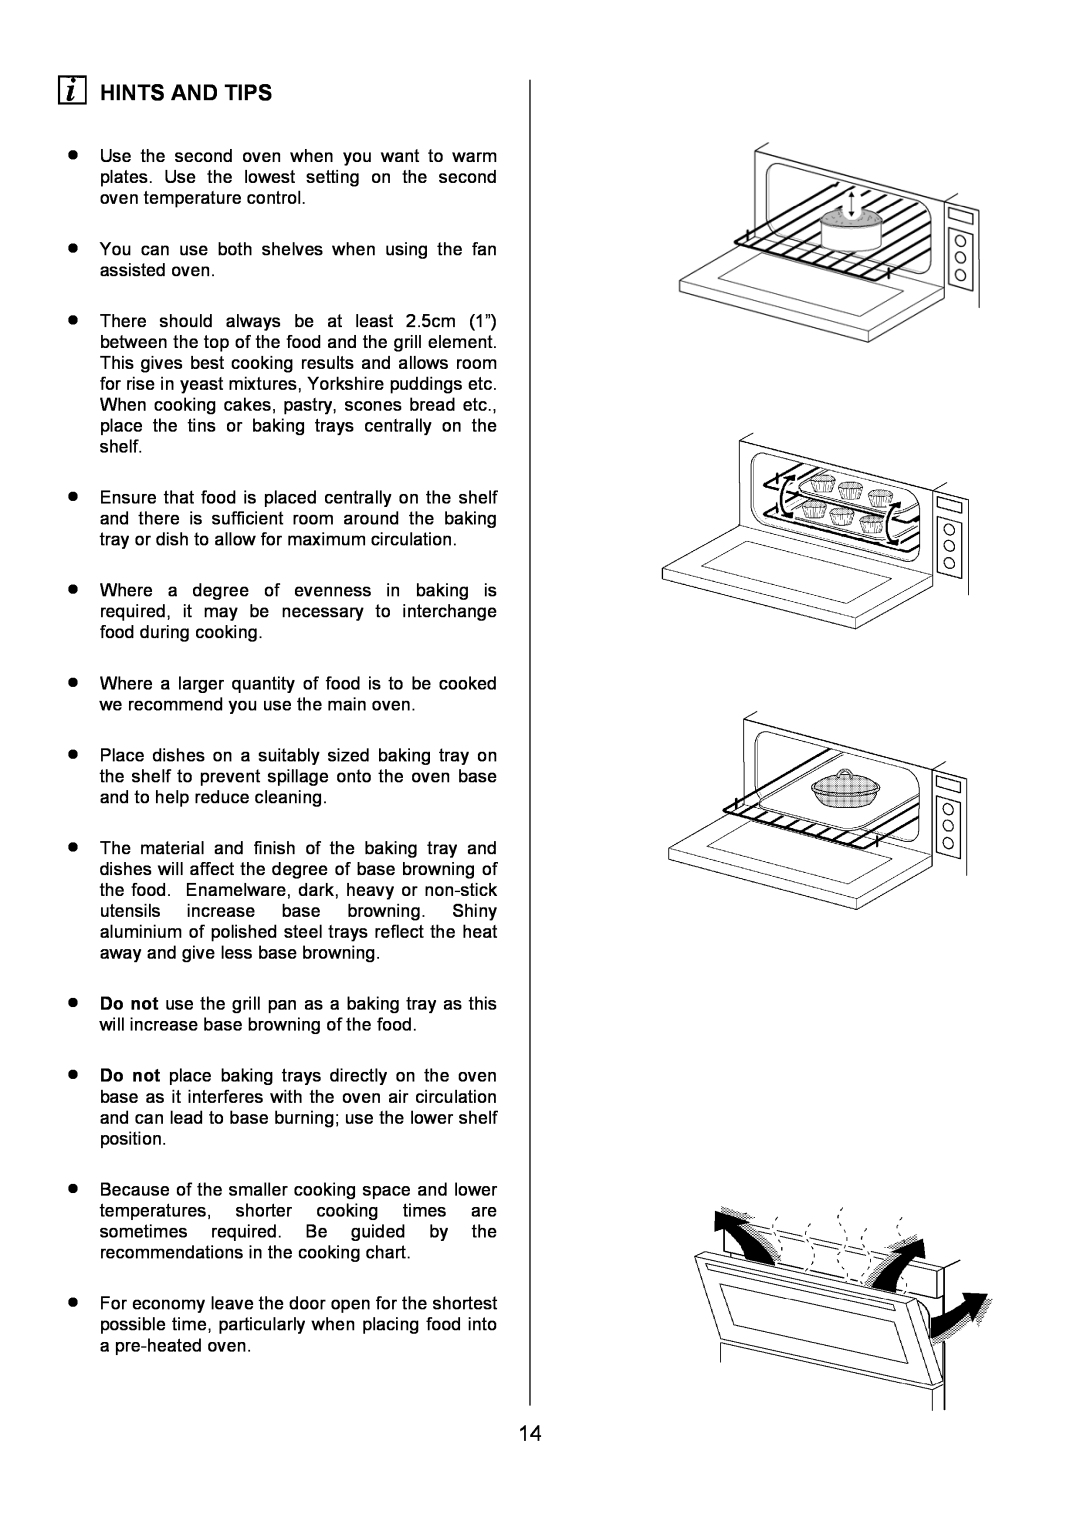 AEG U7101-4, 311704300 manual Hints And Tips 